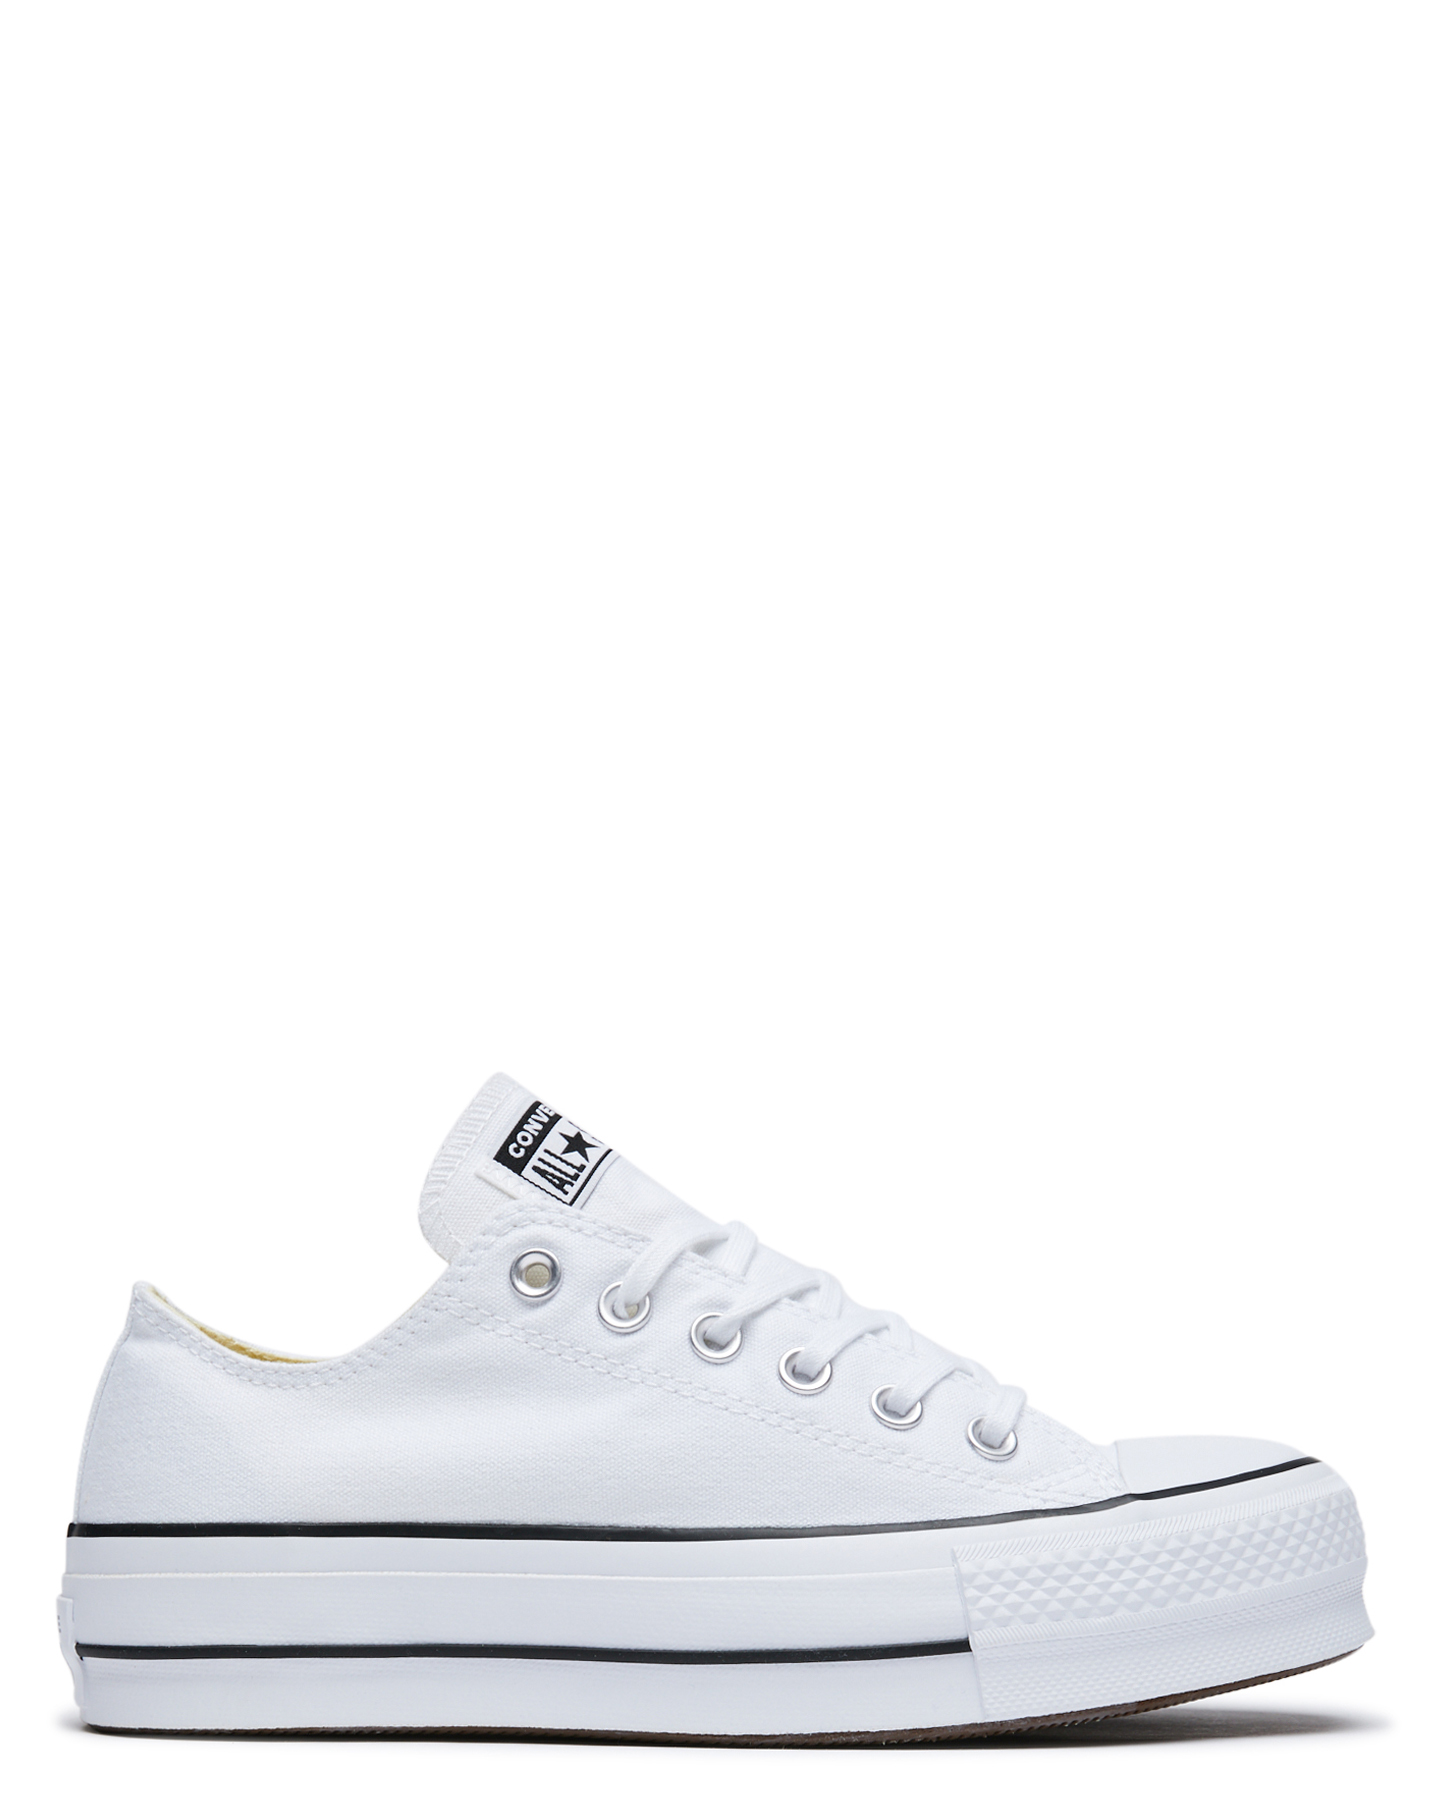 white converse size 3